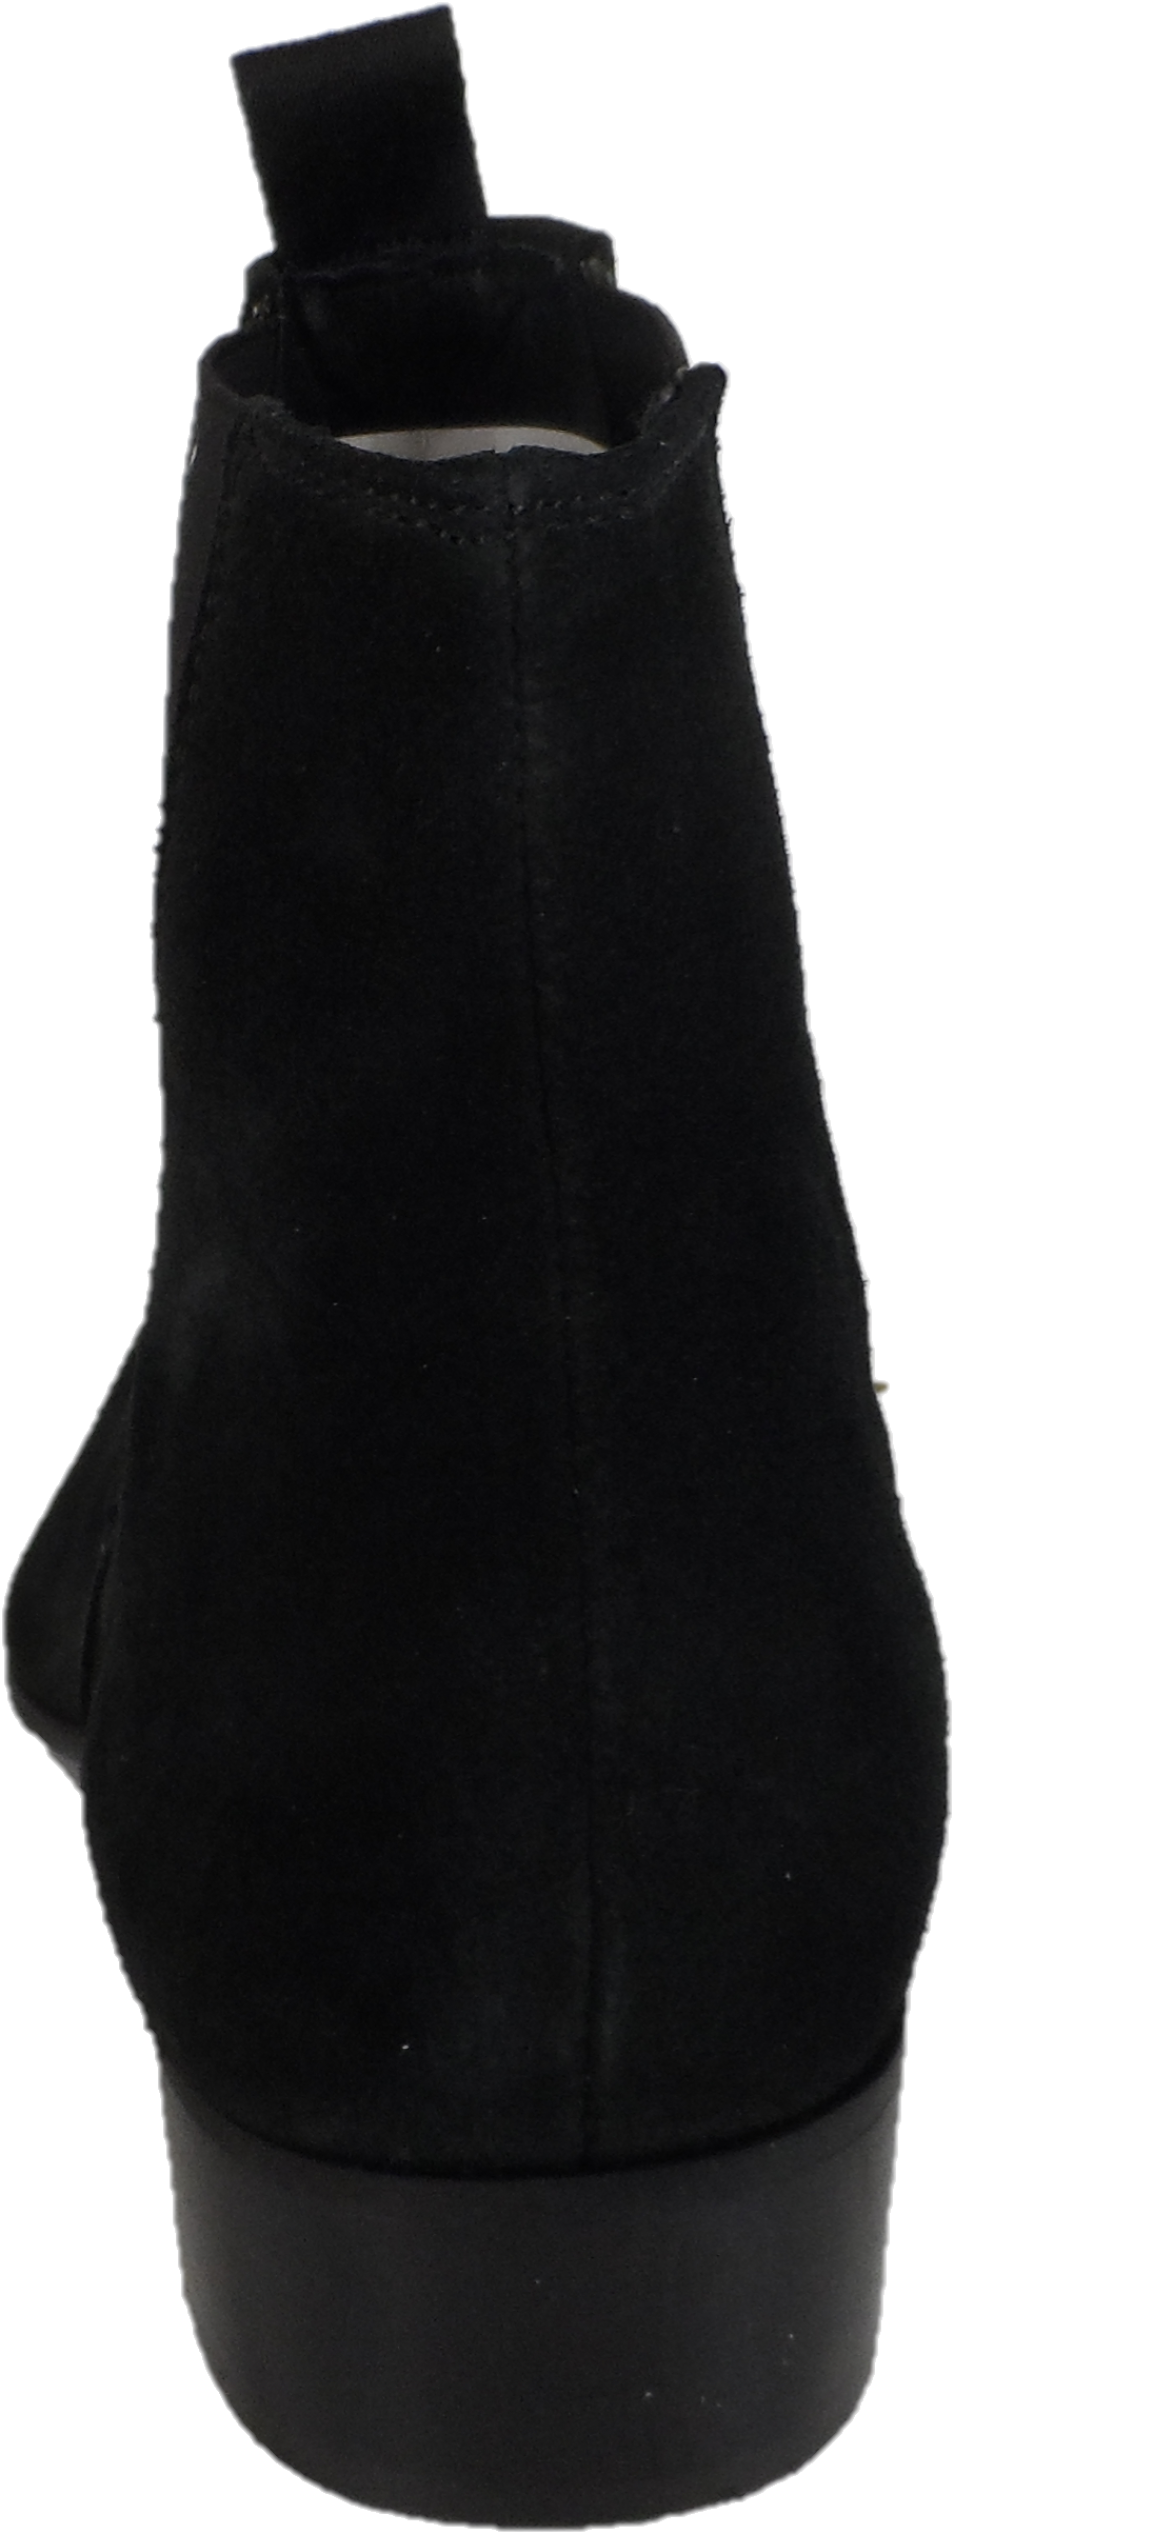 Ikon Original stivali beatle mod winklepicker in vera pelle scamosciata nera